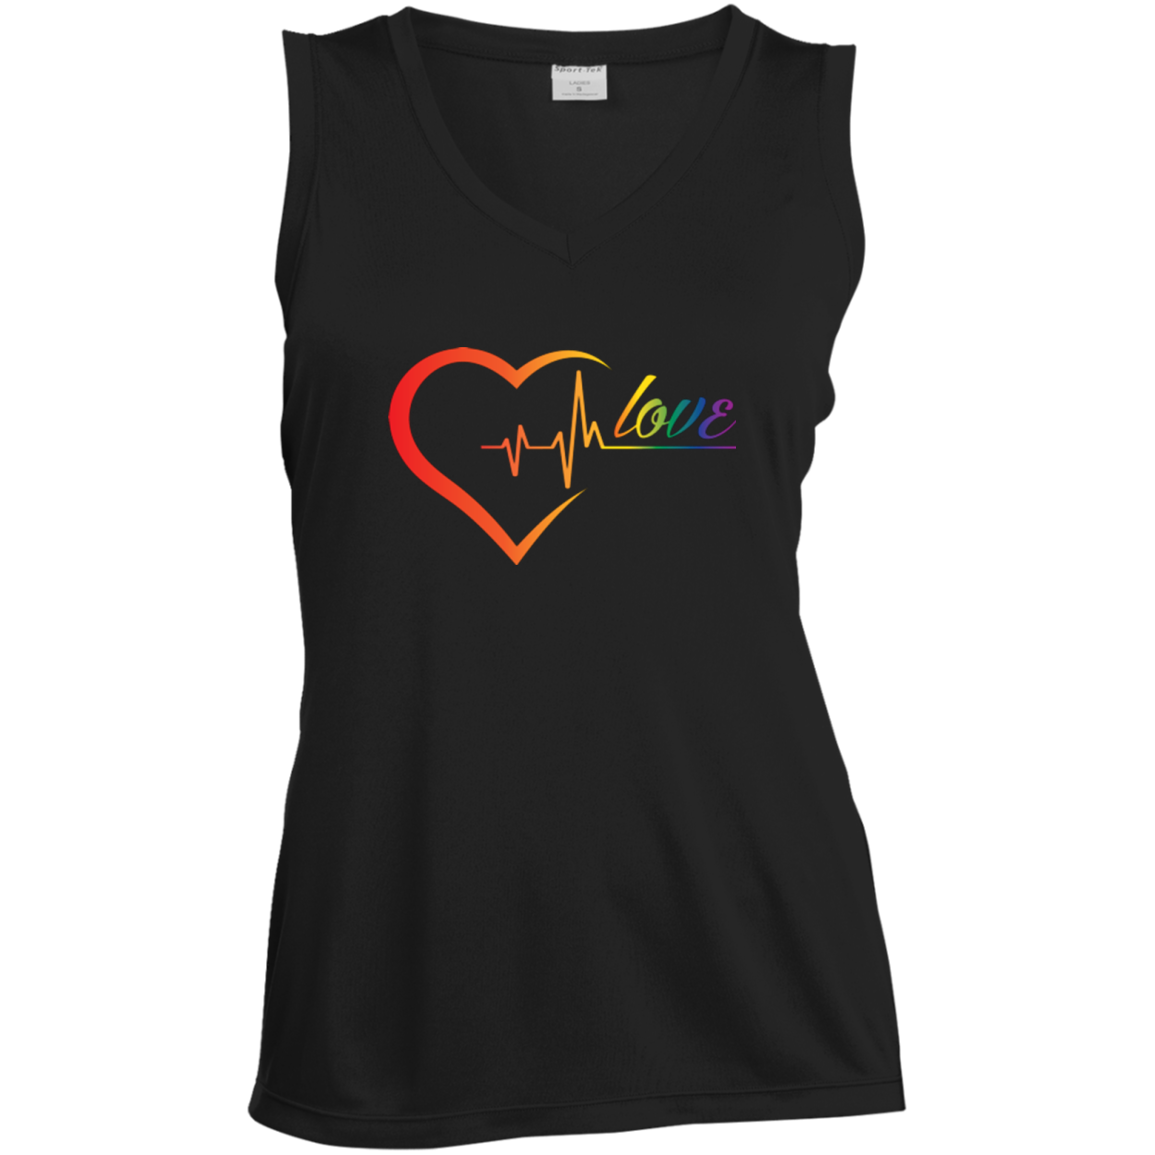 Rainbow Heartbeat Love Shirt Gay Pride black v-neck sleeveless tshirt for women